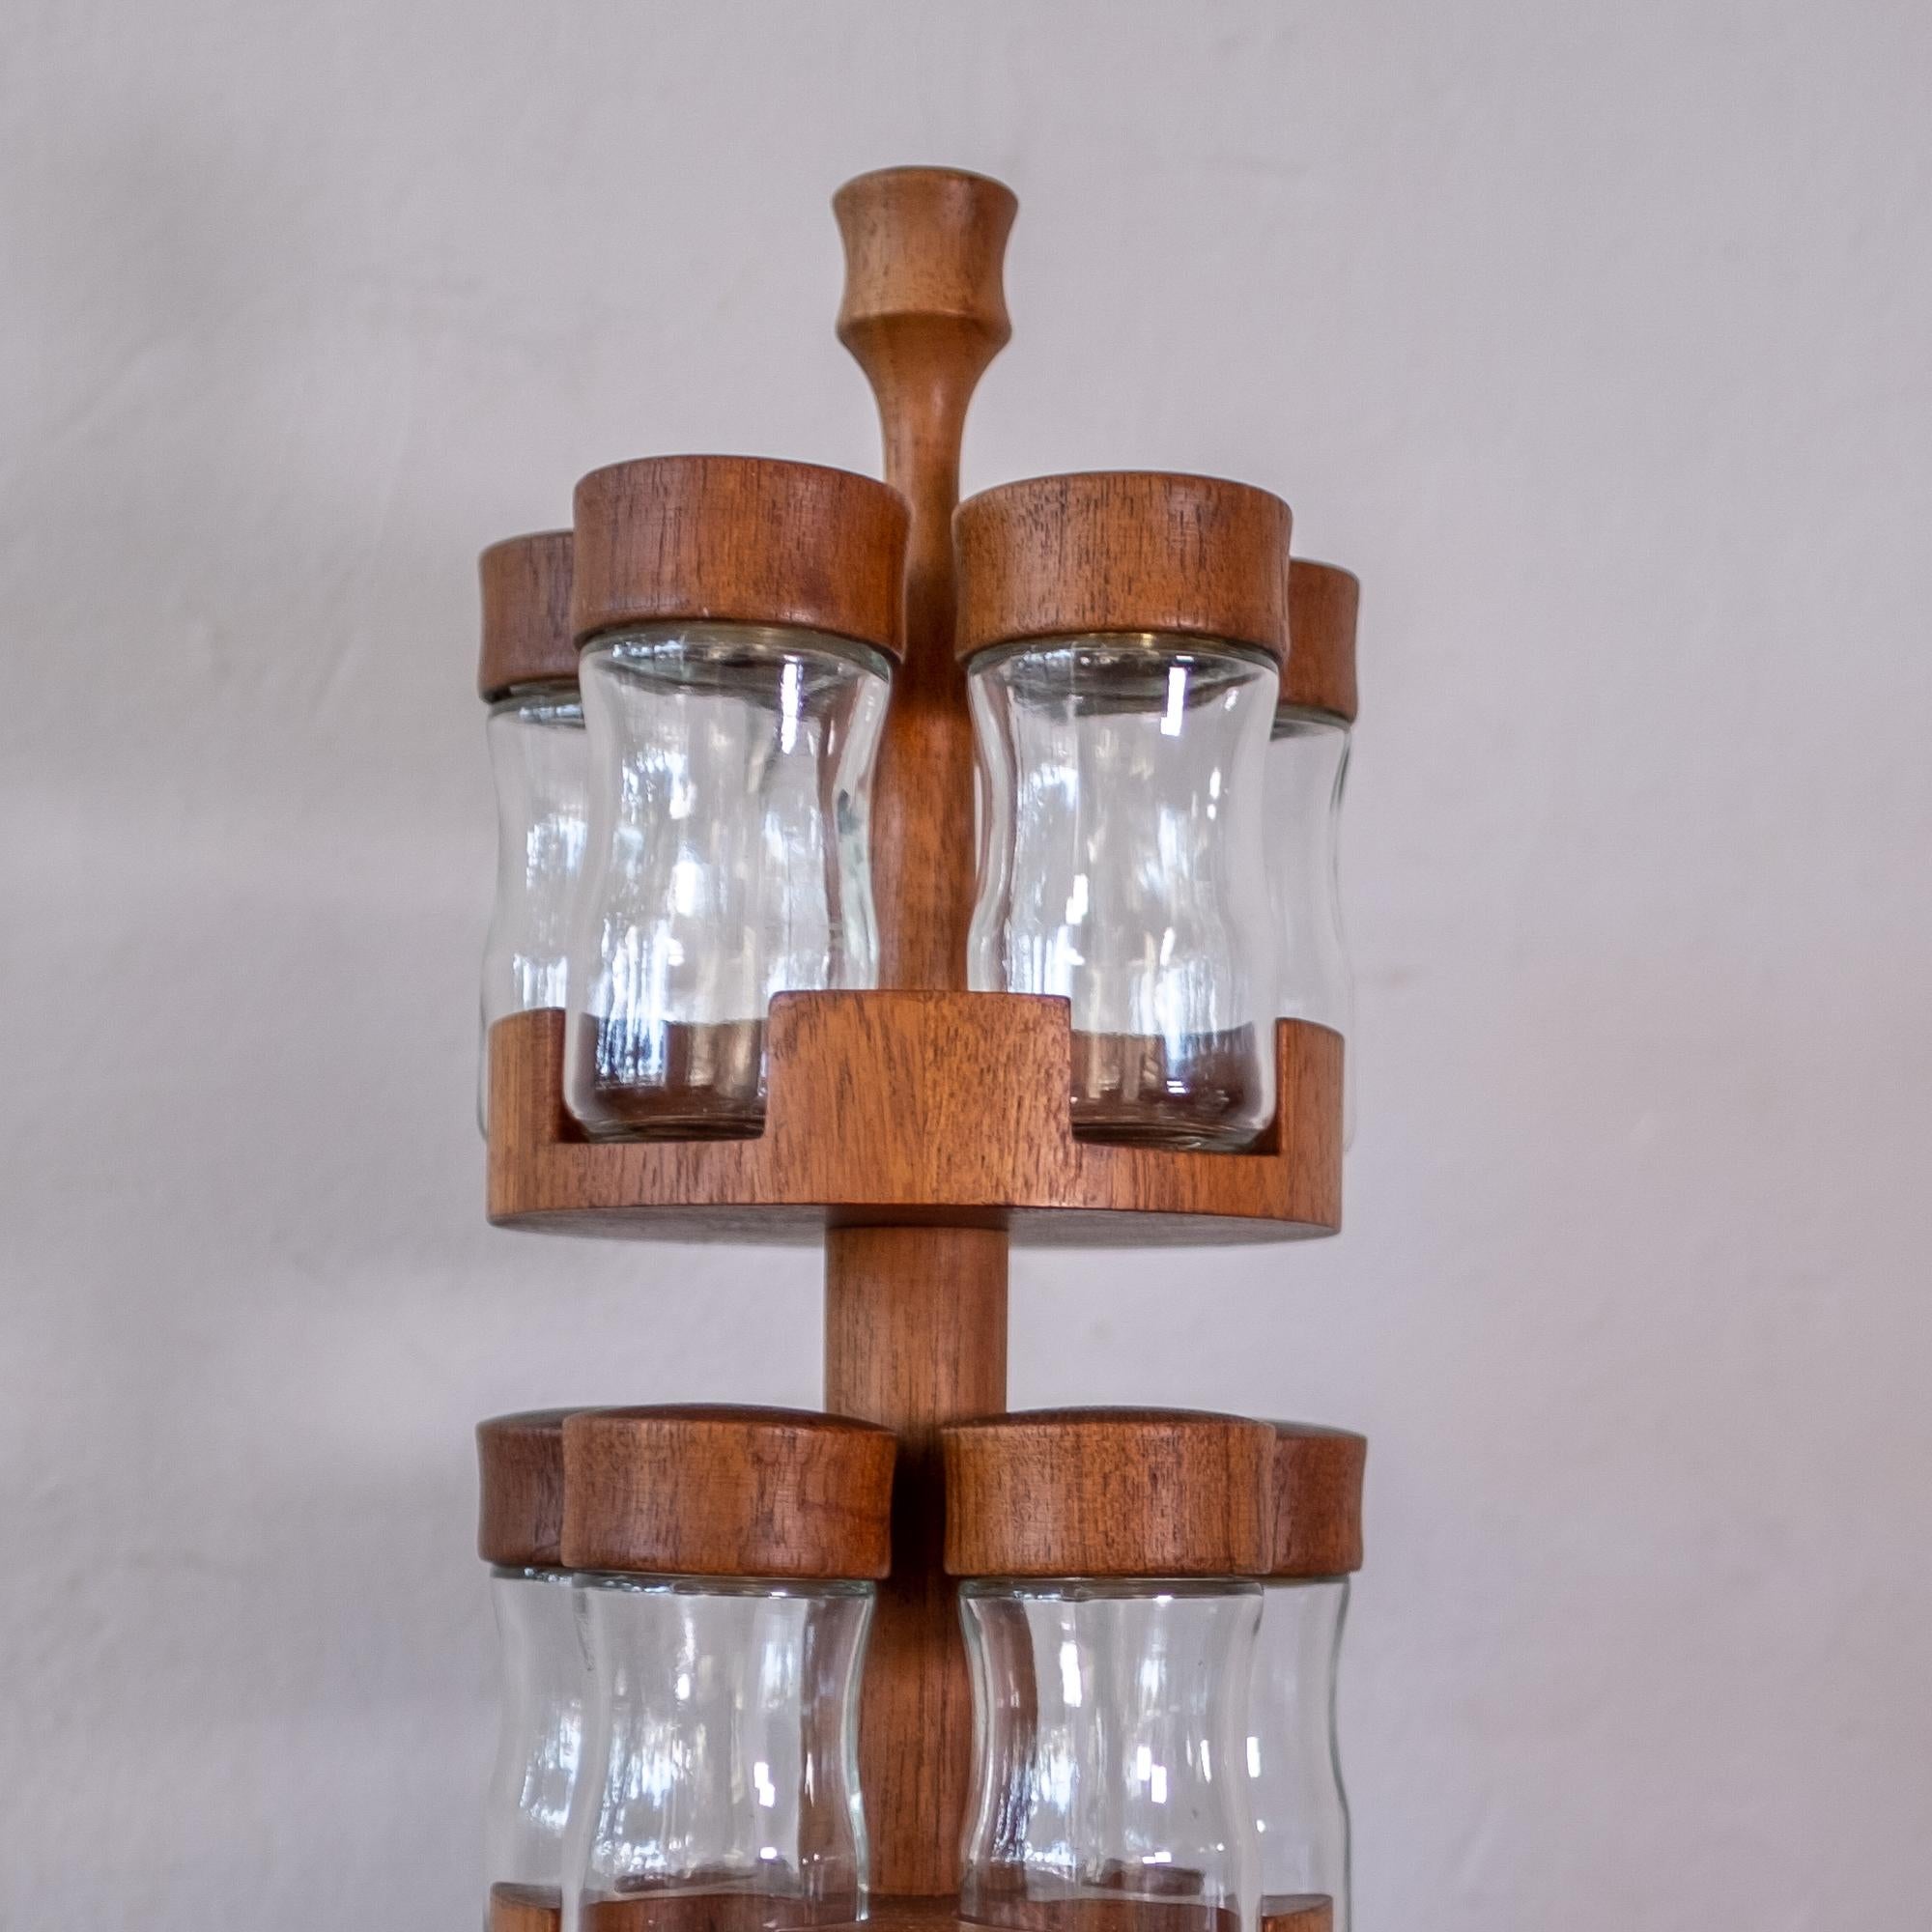 Rotating teak spice rack by Digsmed. It holds 15 spice bottles. Made in Denmark, 1960s.